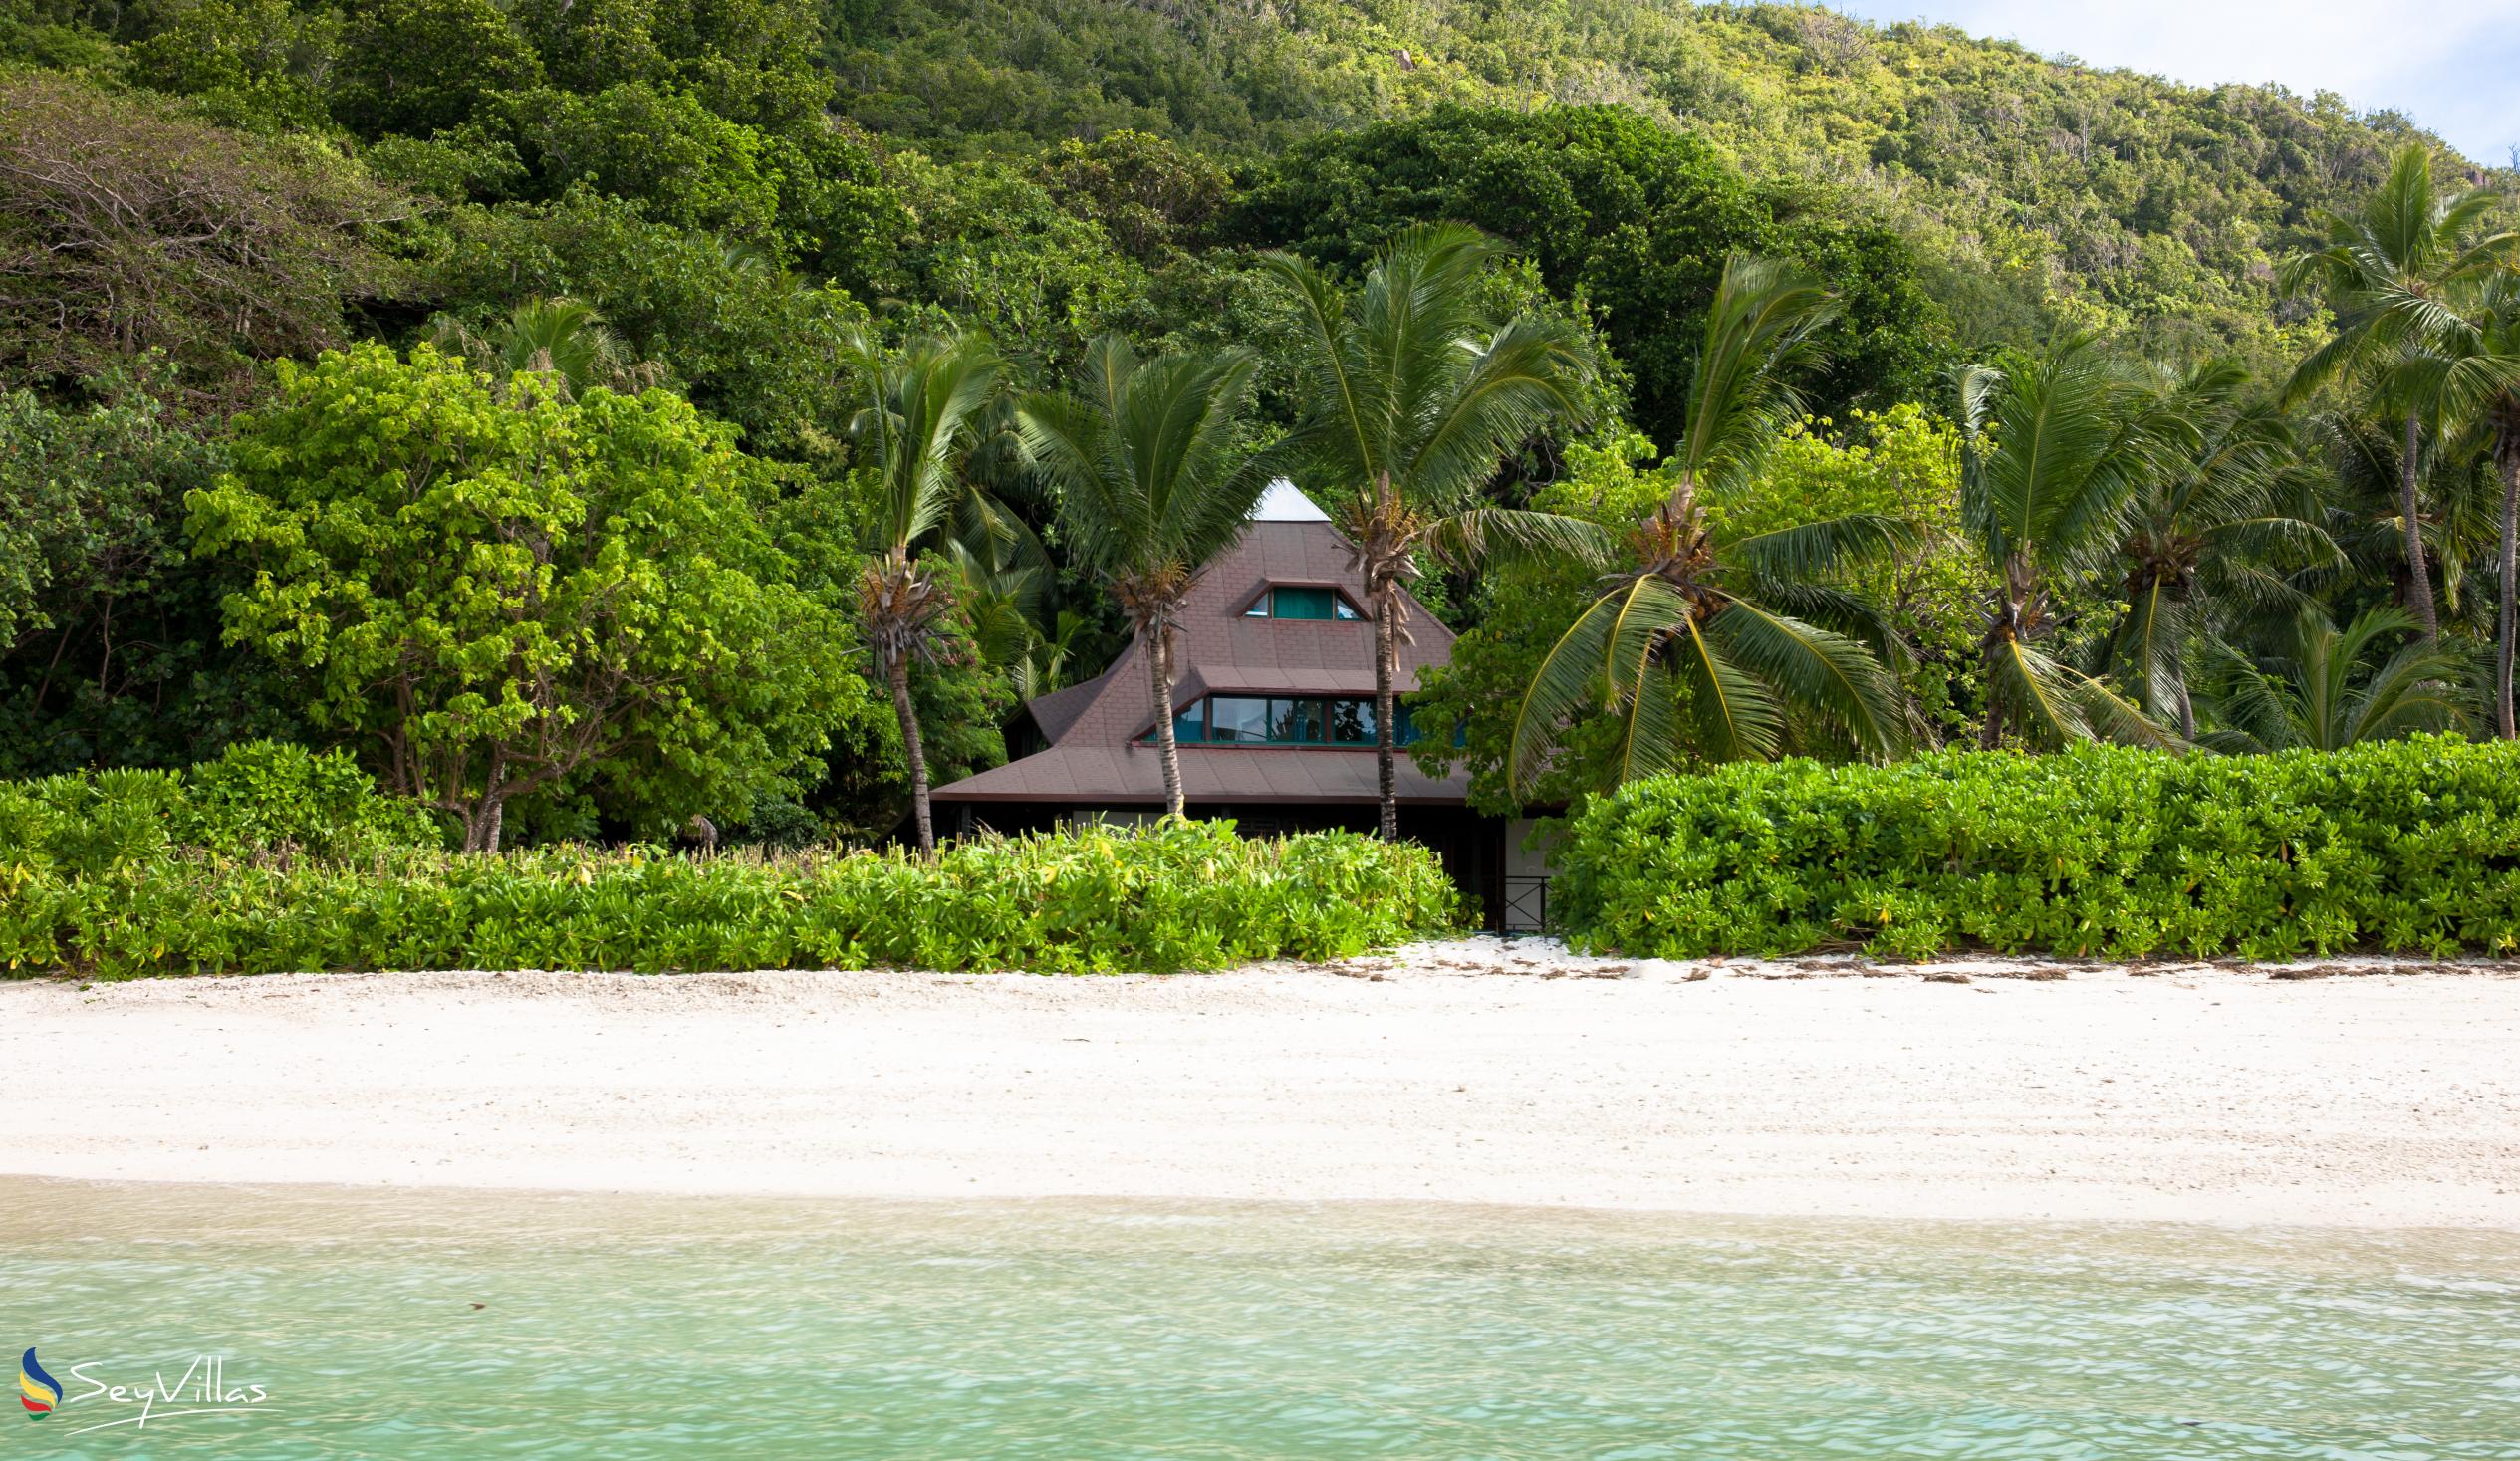 Photo 7: Anse la Farine - Praslin (Seychelles)